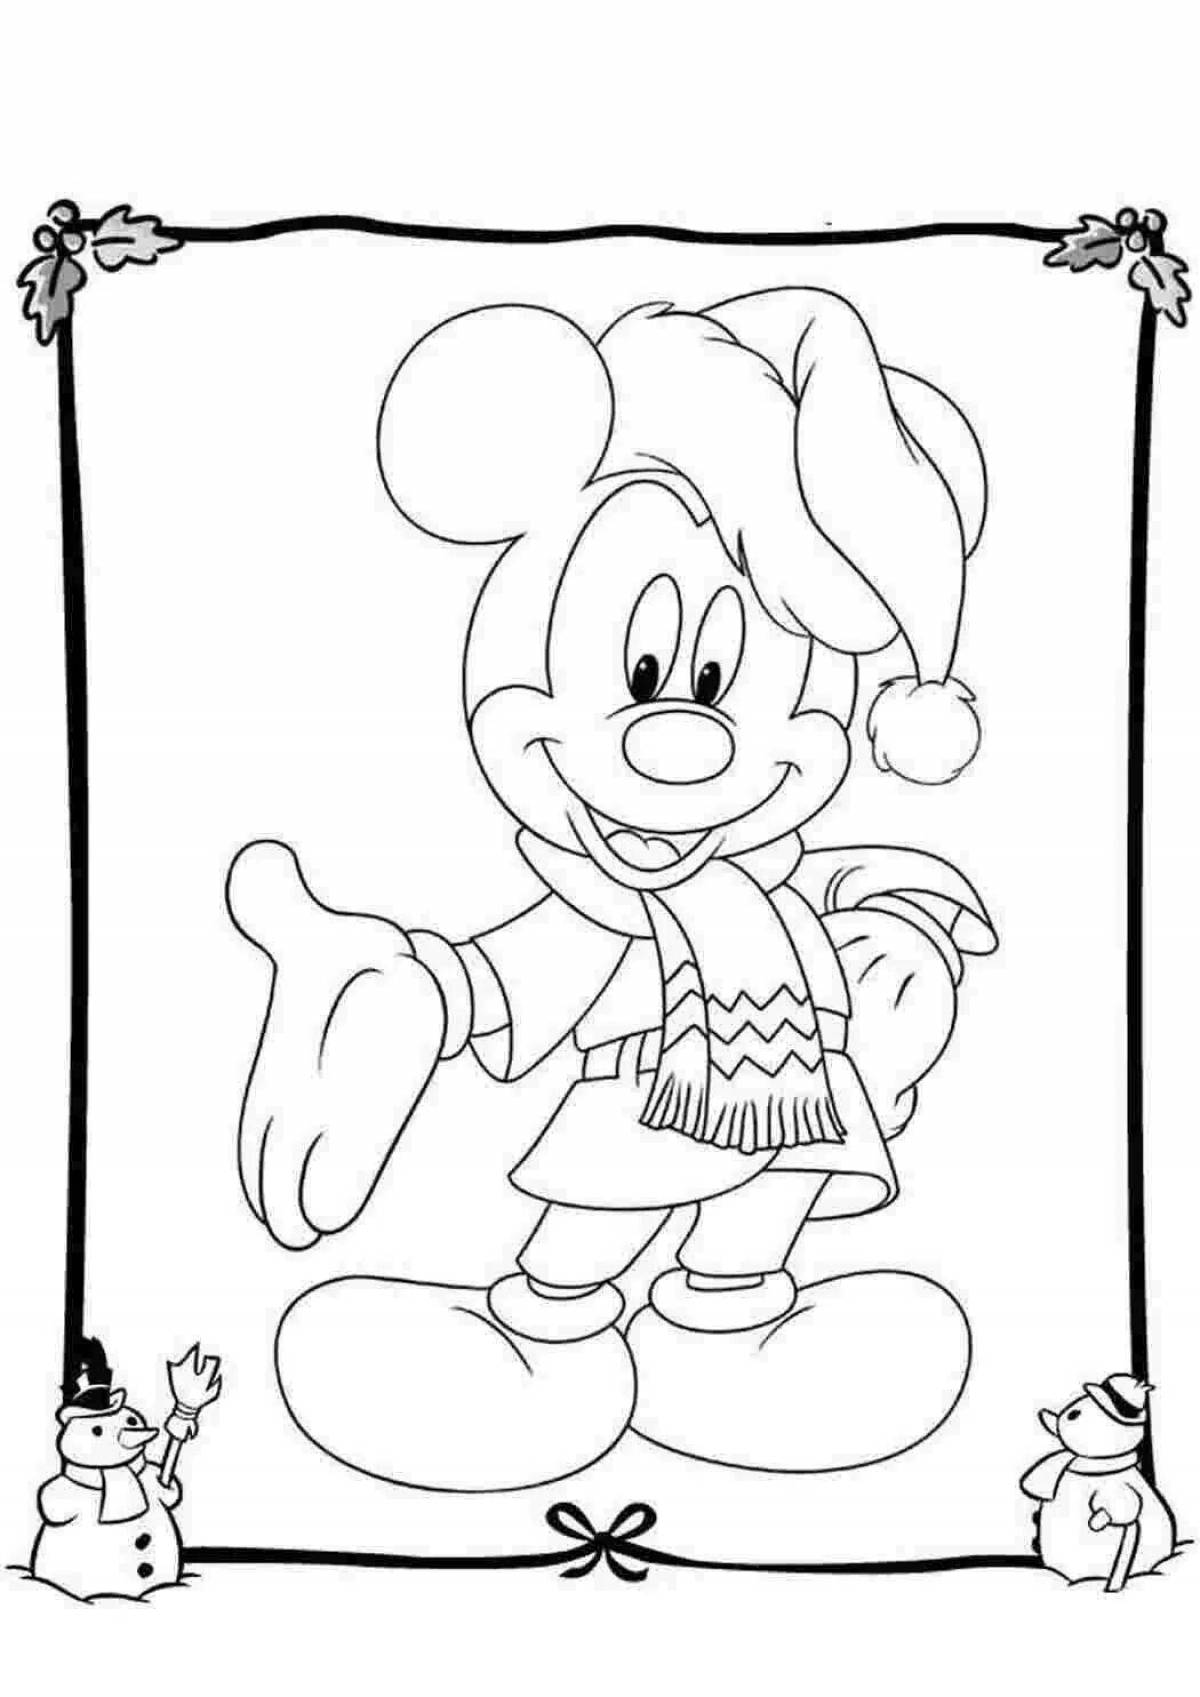 Mickey mouse's fun Christmas coloring book